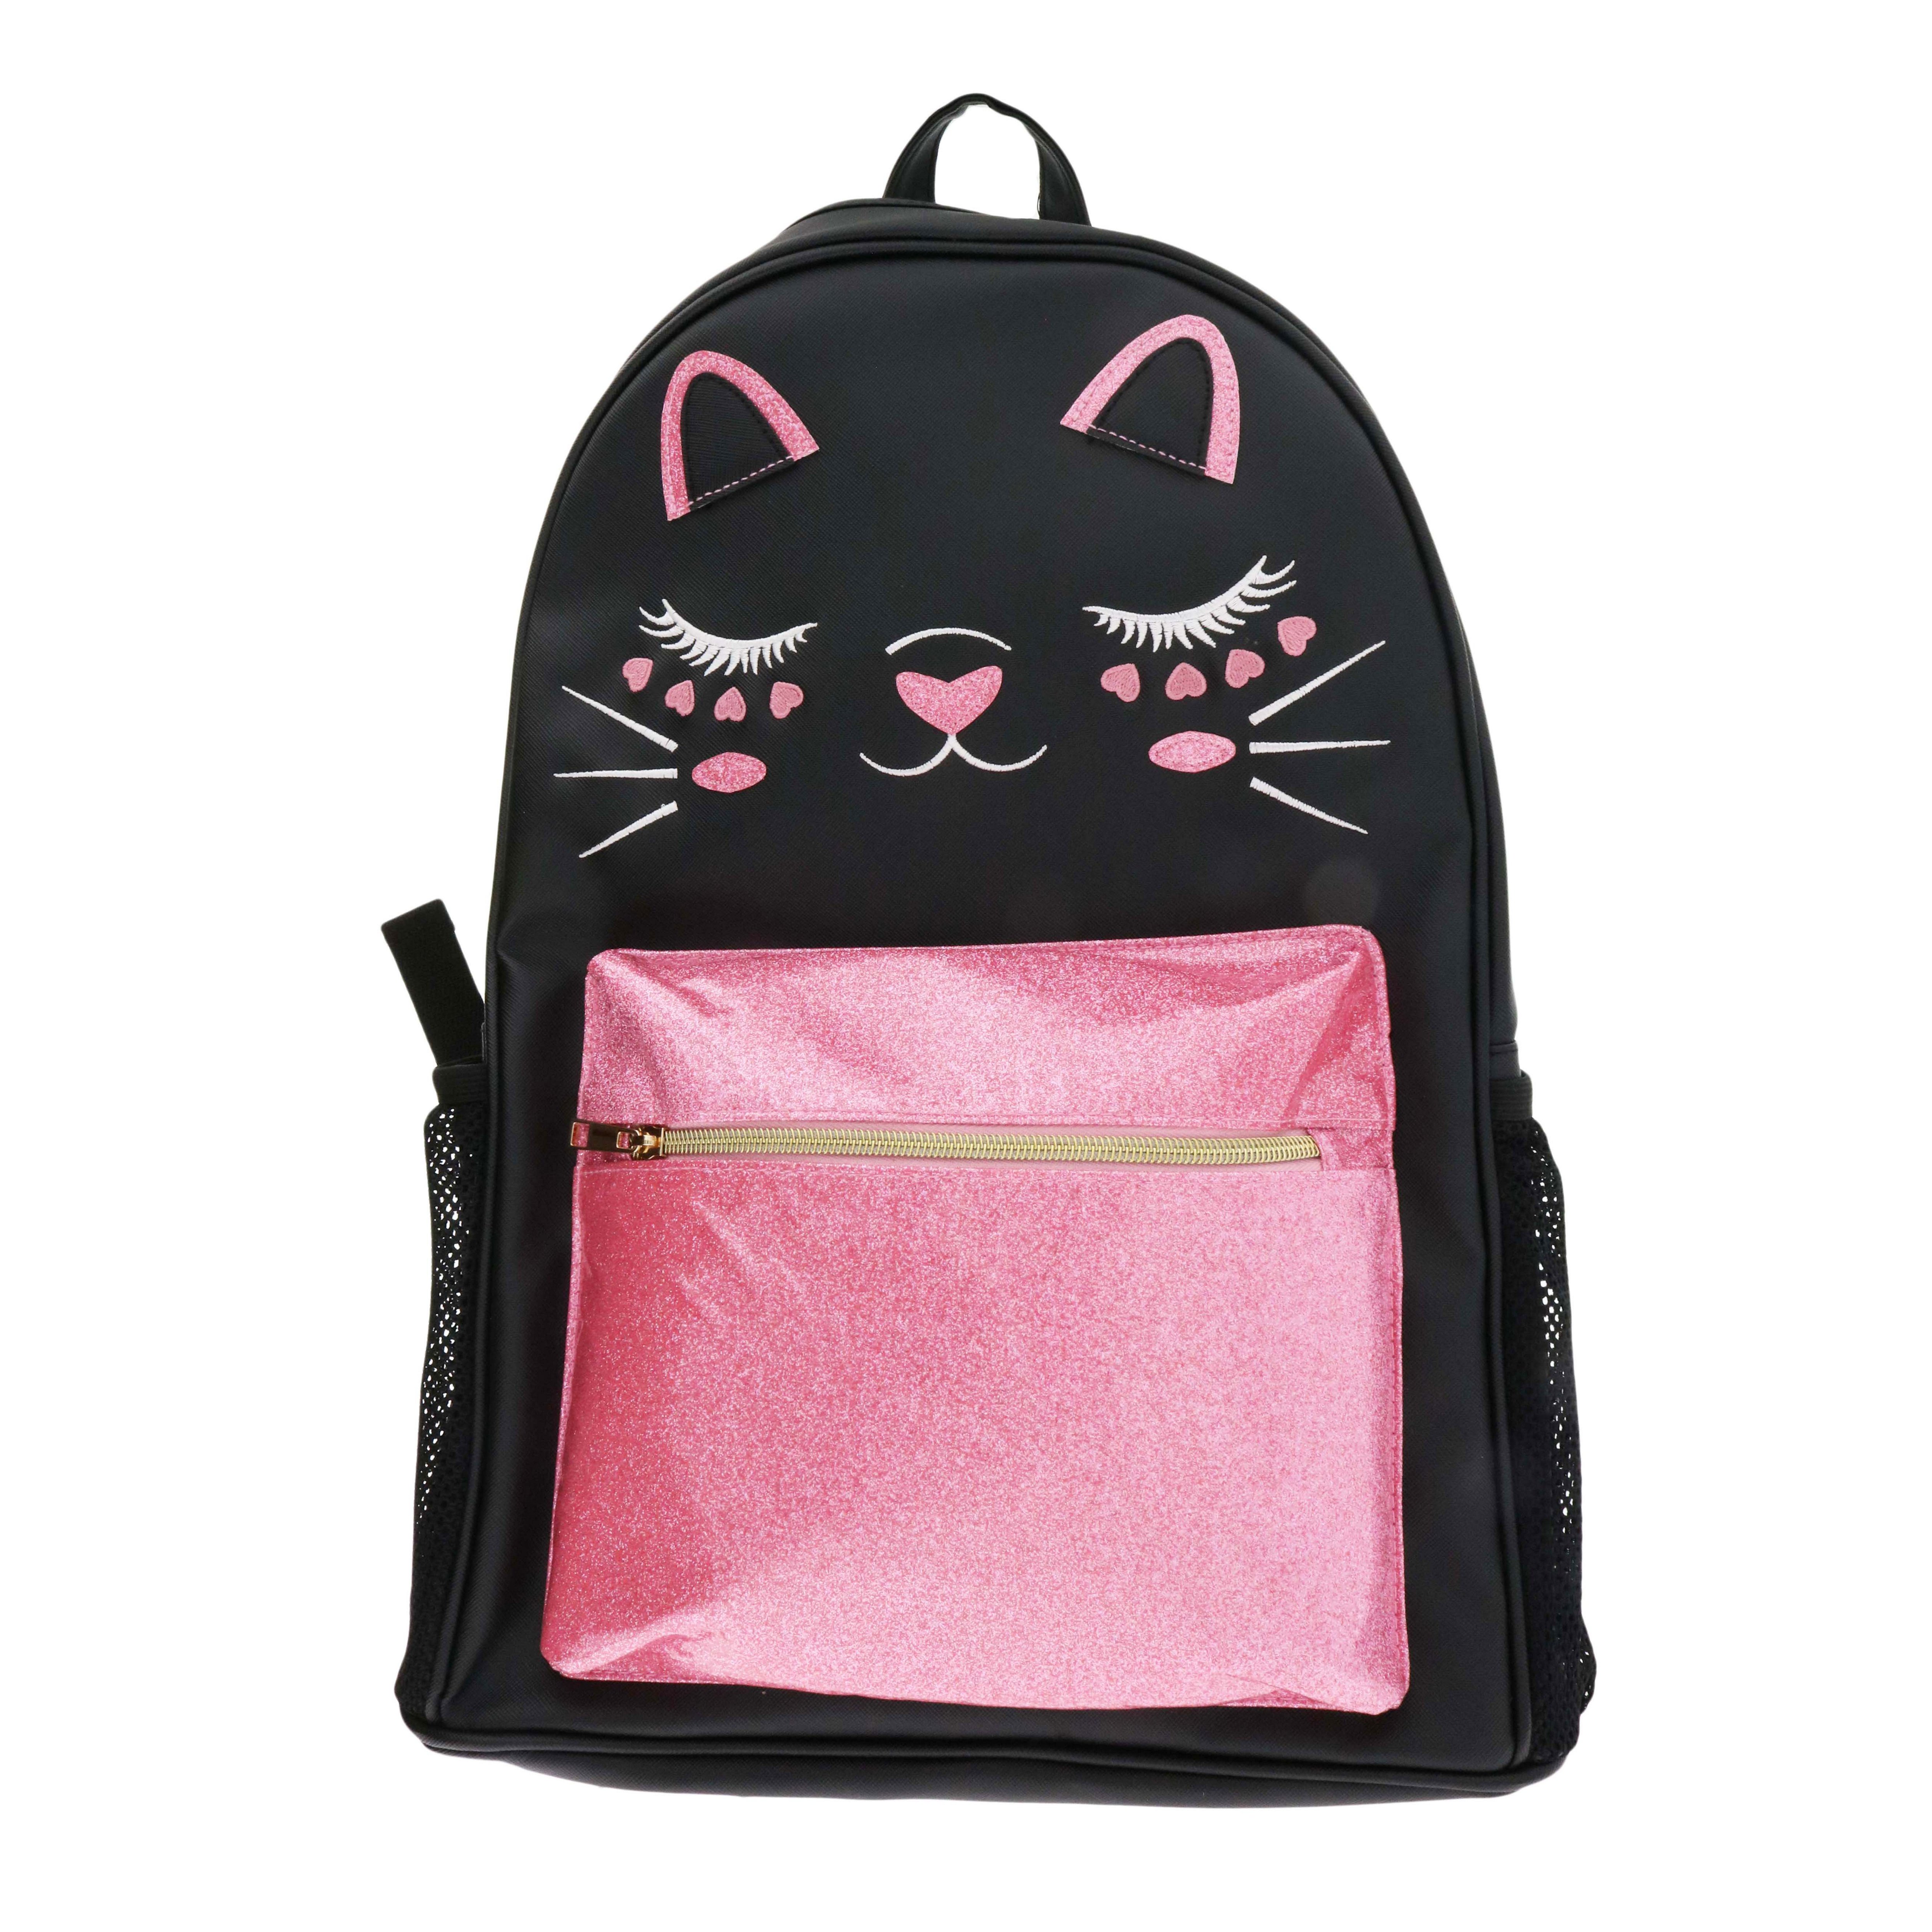 Saks OFF 5TH UNDER ONE SKY Embellished Tie-Dye Cat Backpack 59.99